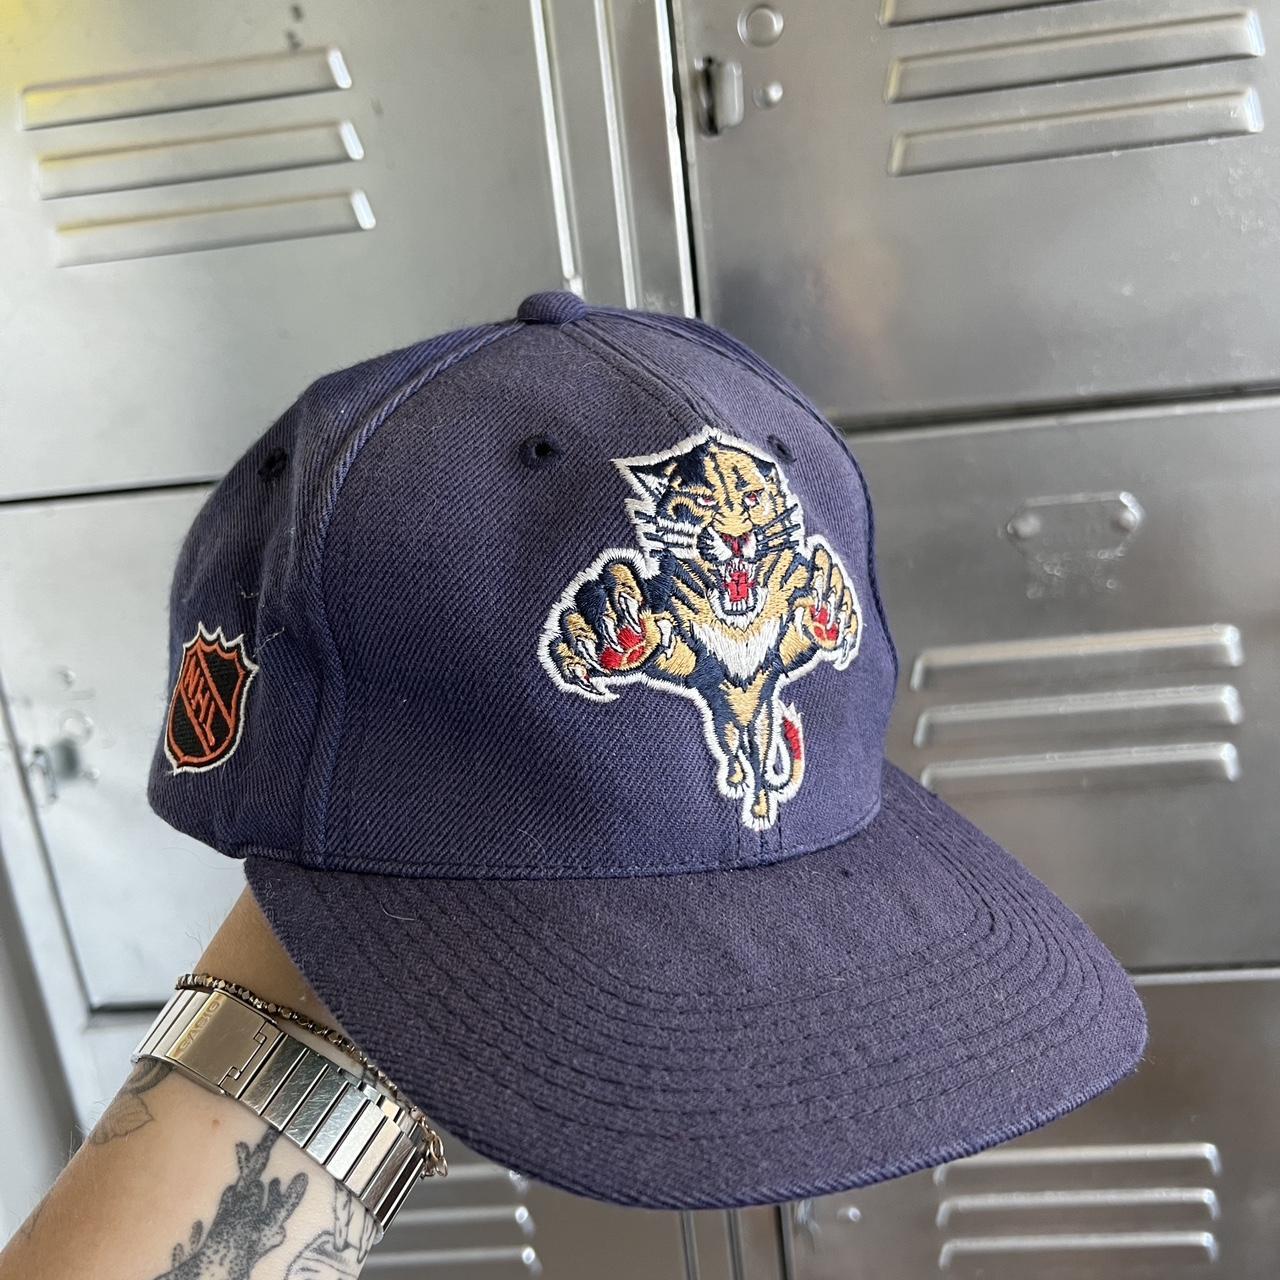 XP Apparel, Accessories, Rare Florida Panthers Hat